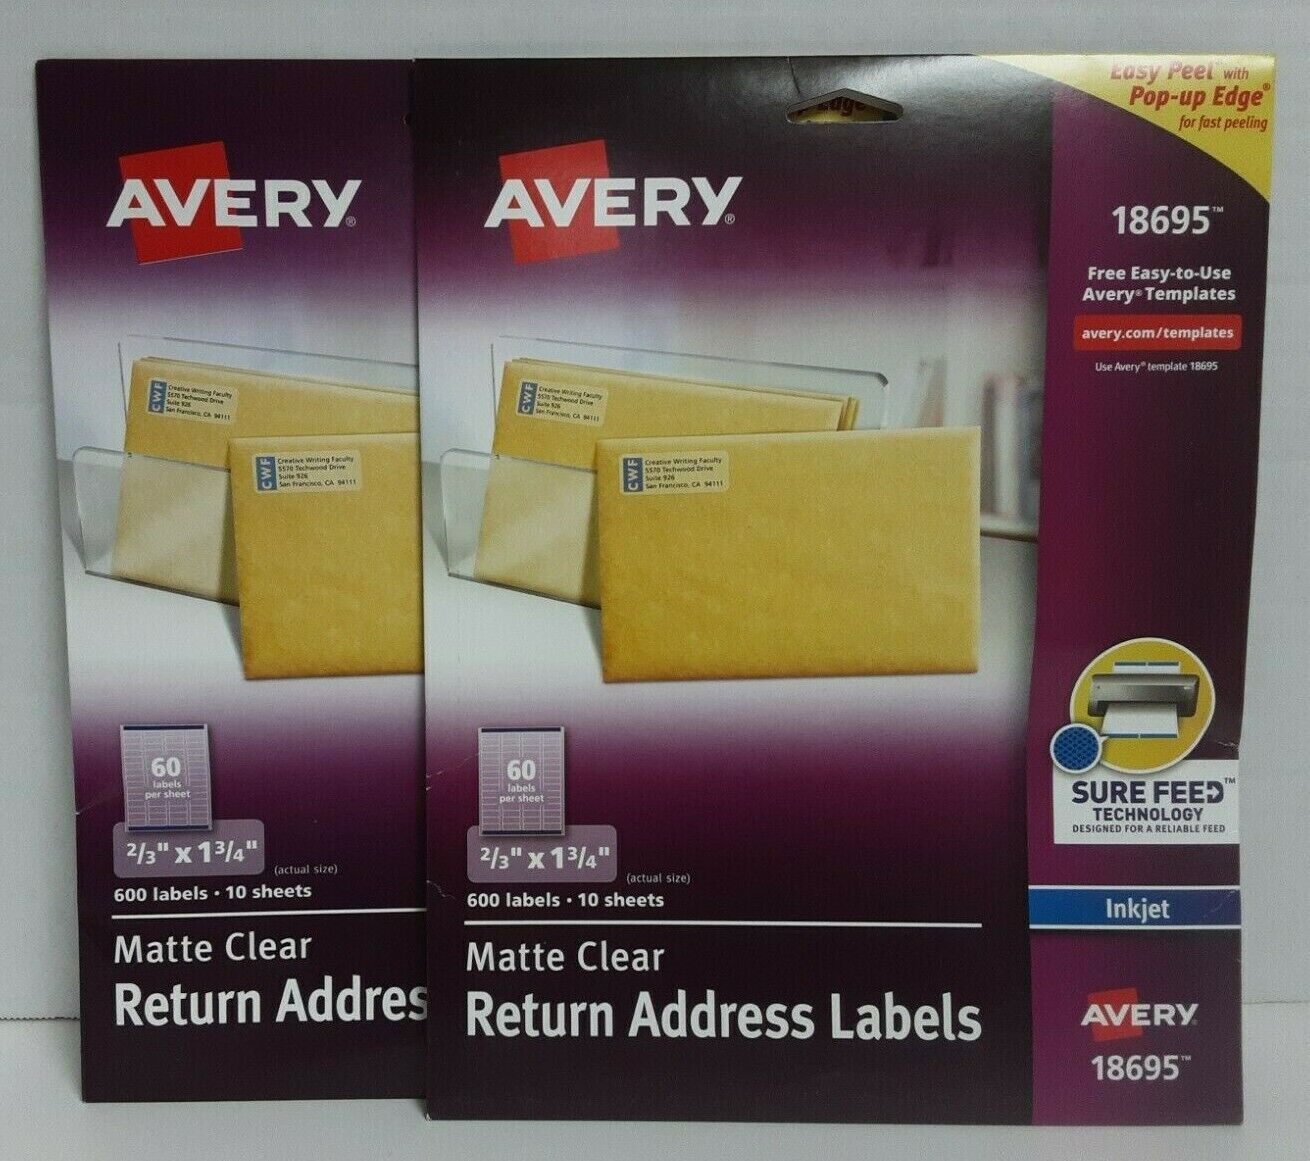 2 packs AVERY 18695 Matte Clear Return Address Labels 2/3"x1-3/4" (600 per pack)